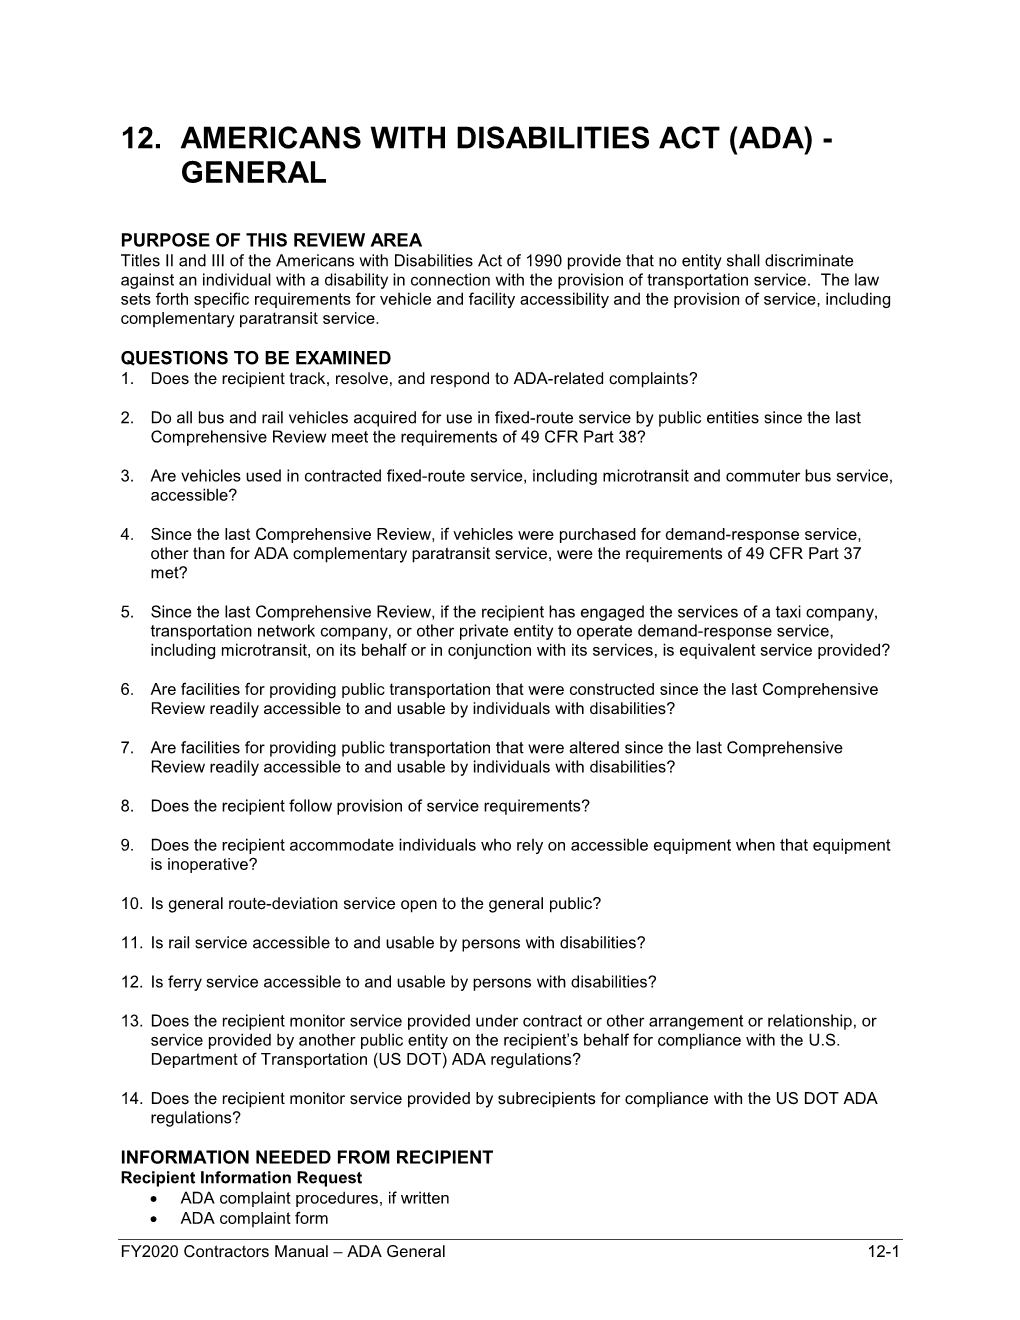 FY2020 Contractors Manual Section 12 ADA General